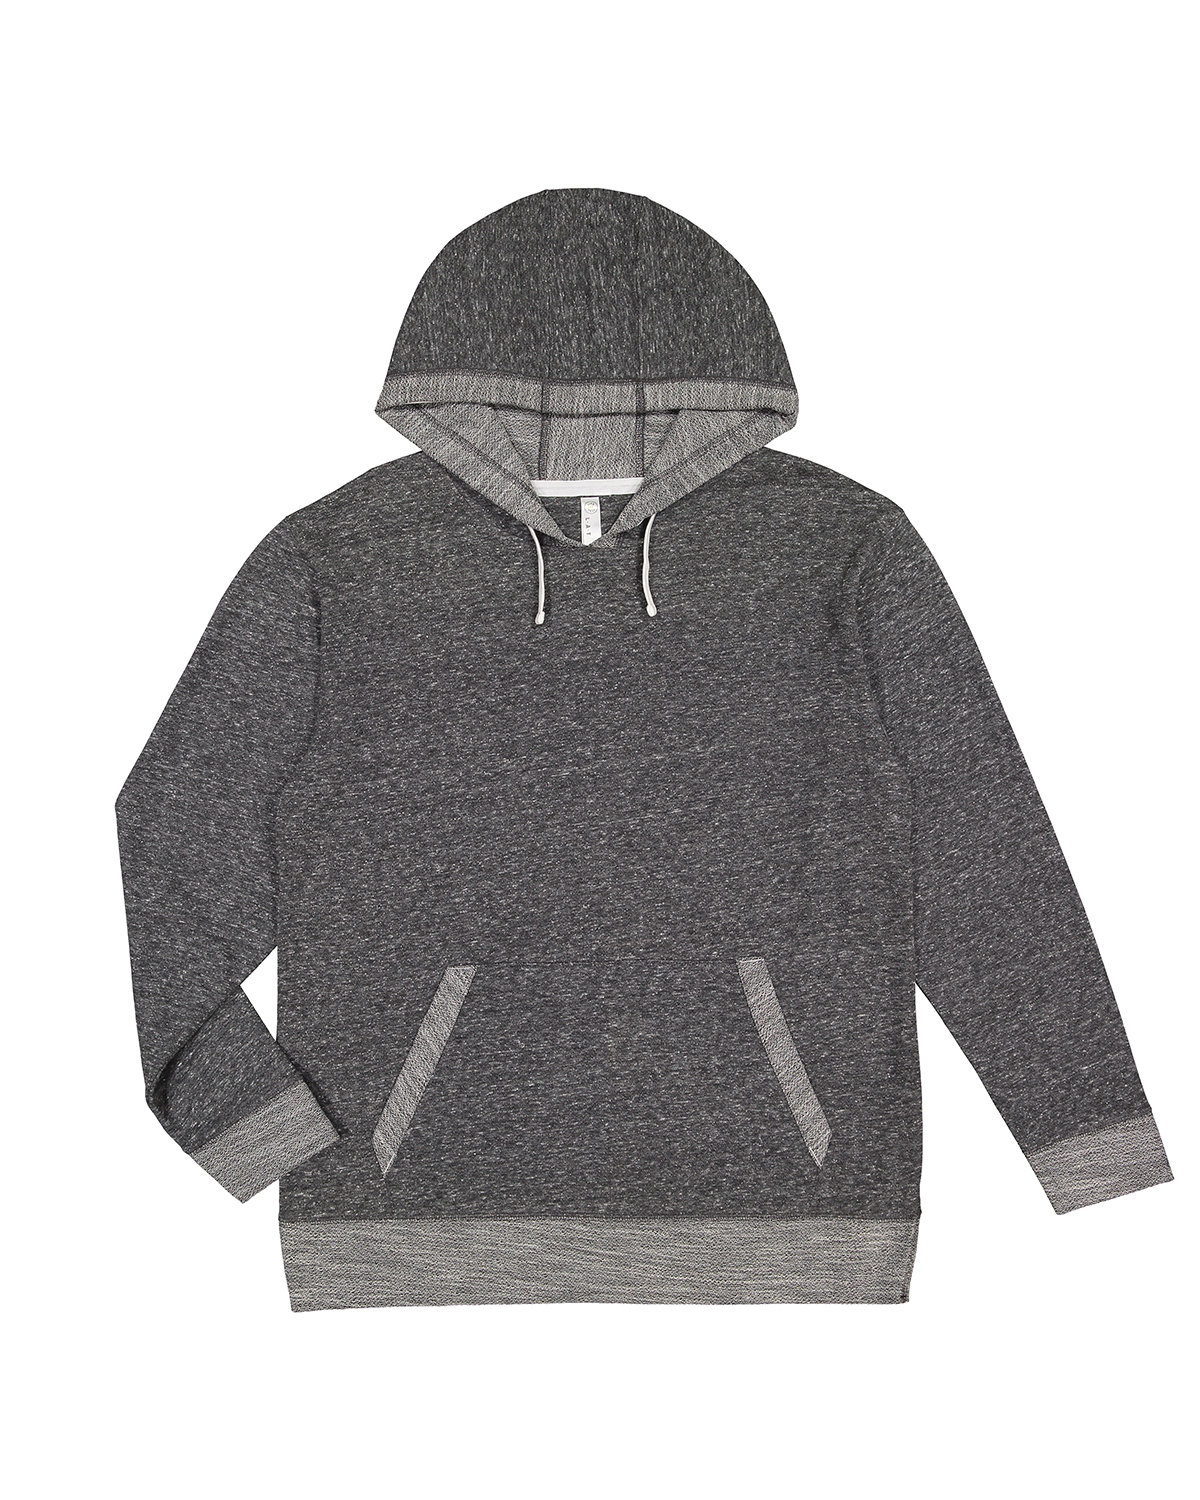 Essential Sweatshirt – Granite Gray Melange French Terry